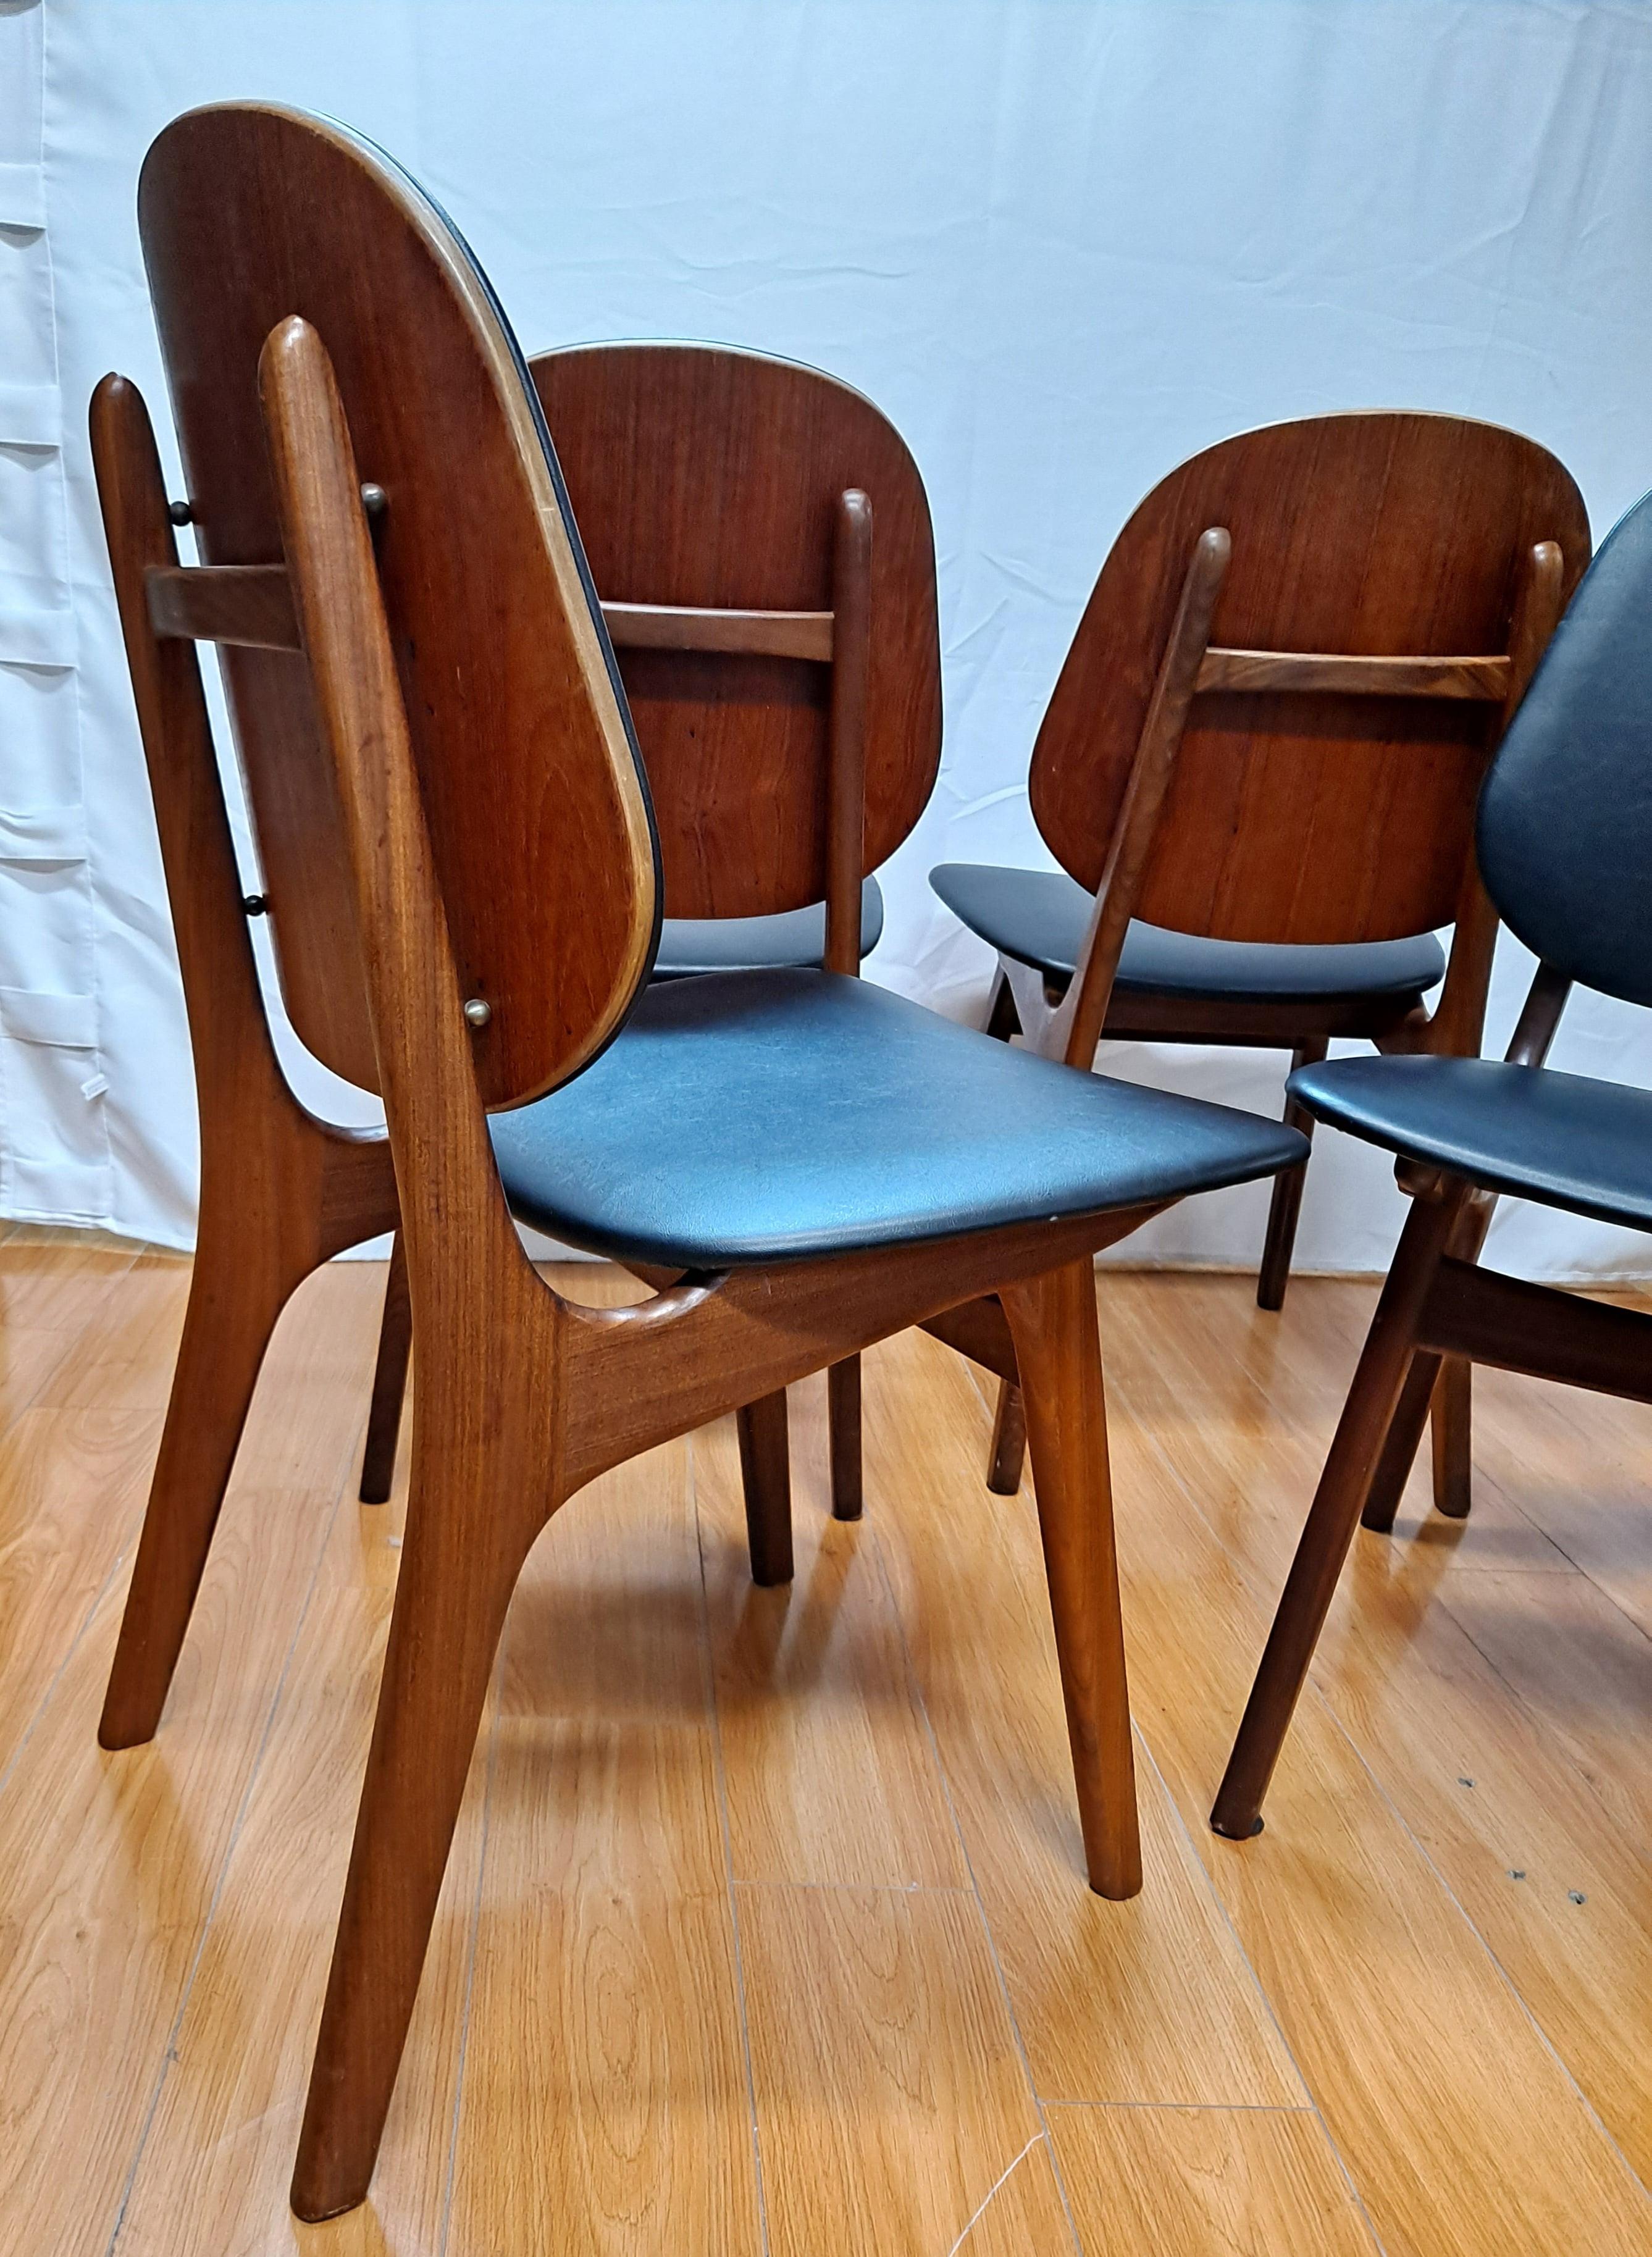 Set of Four Mid-century Danish Teak Dining Chairs by Arne-Hovmand Olsen

18.5